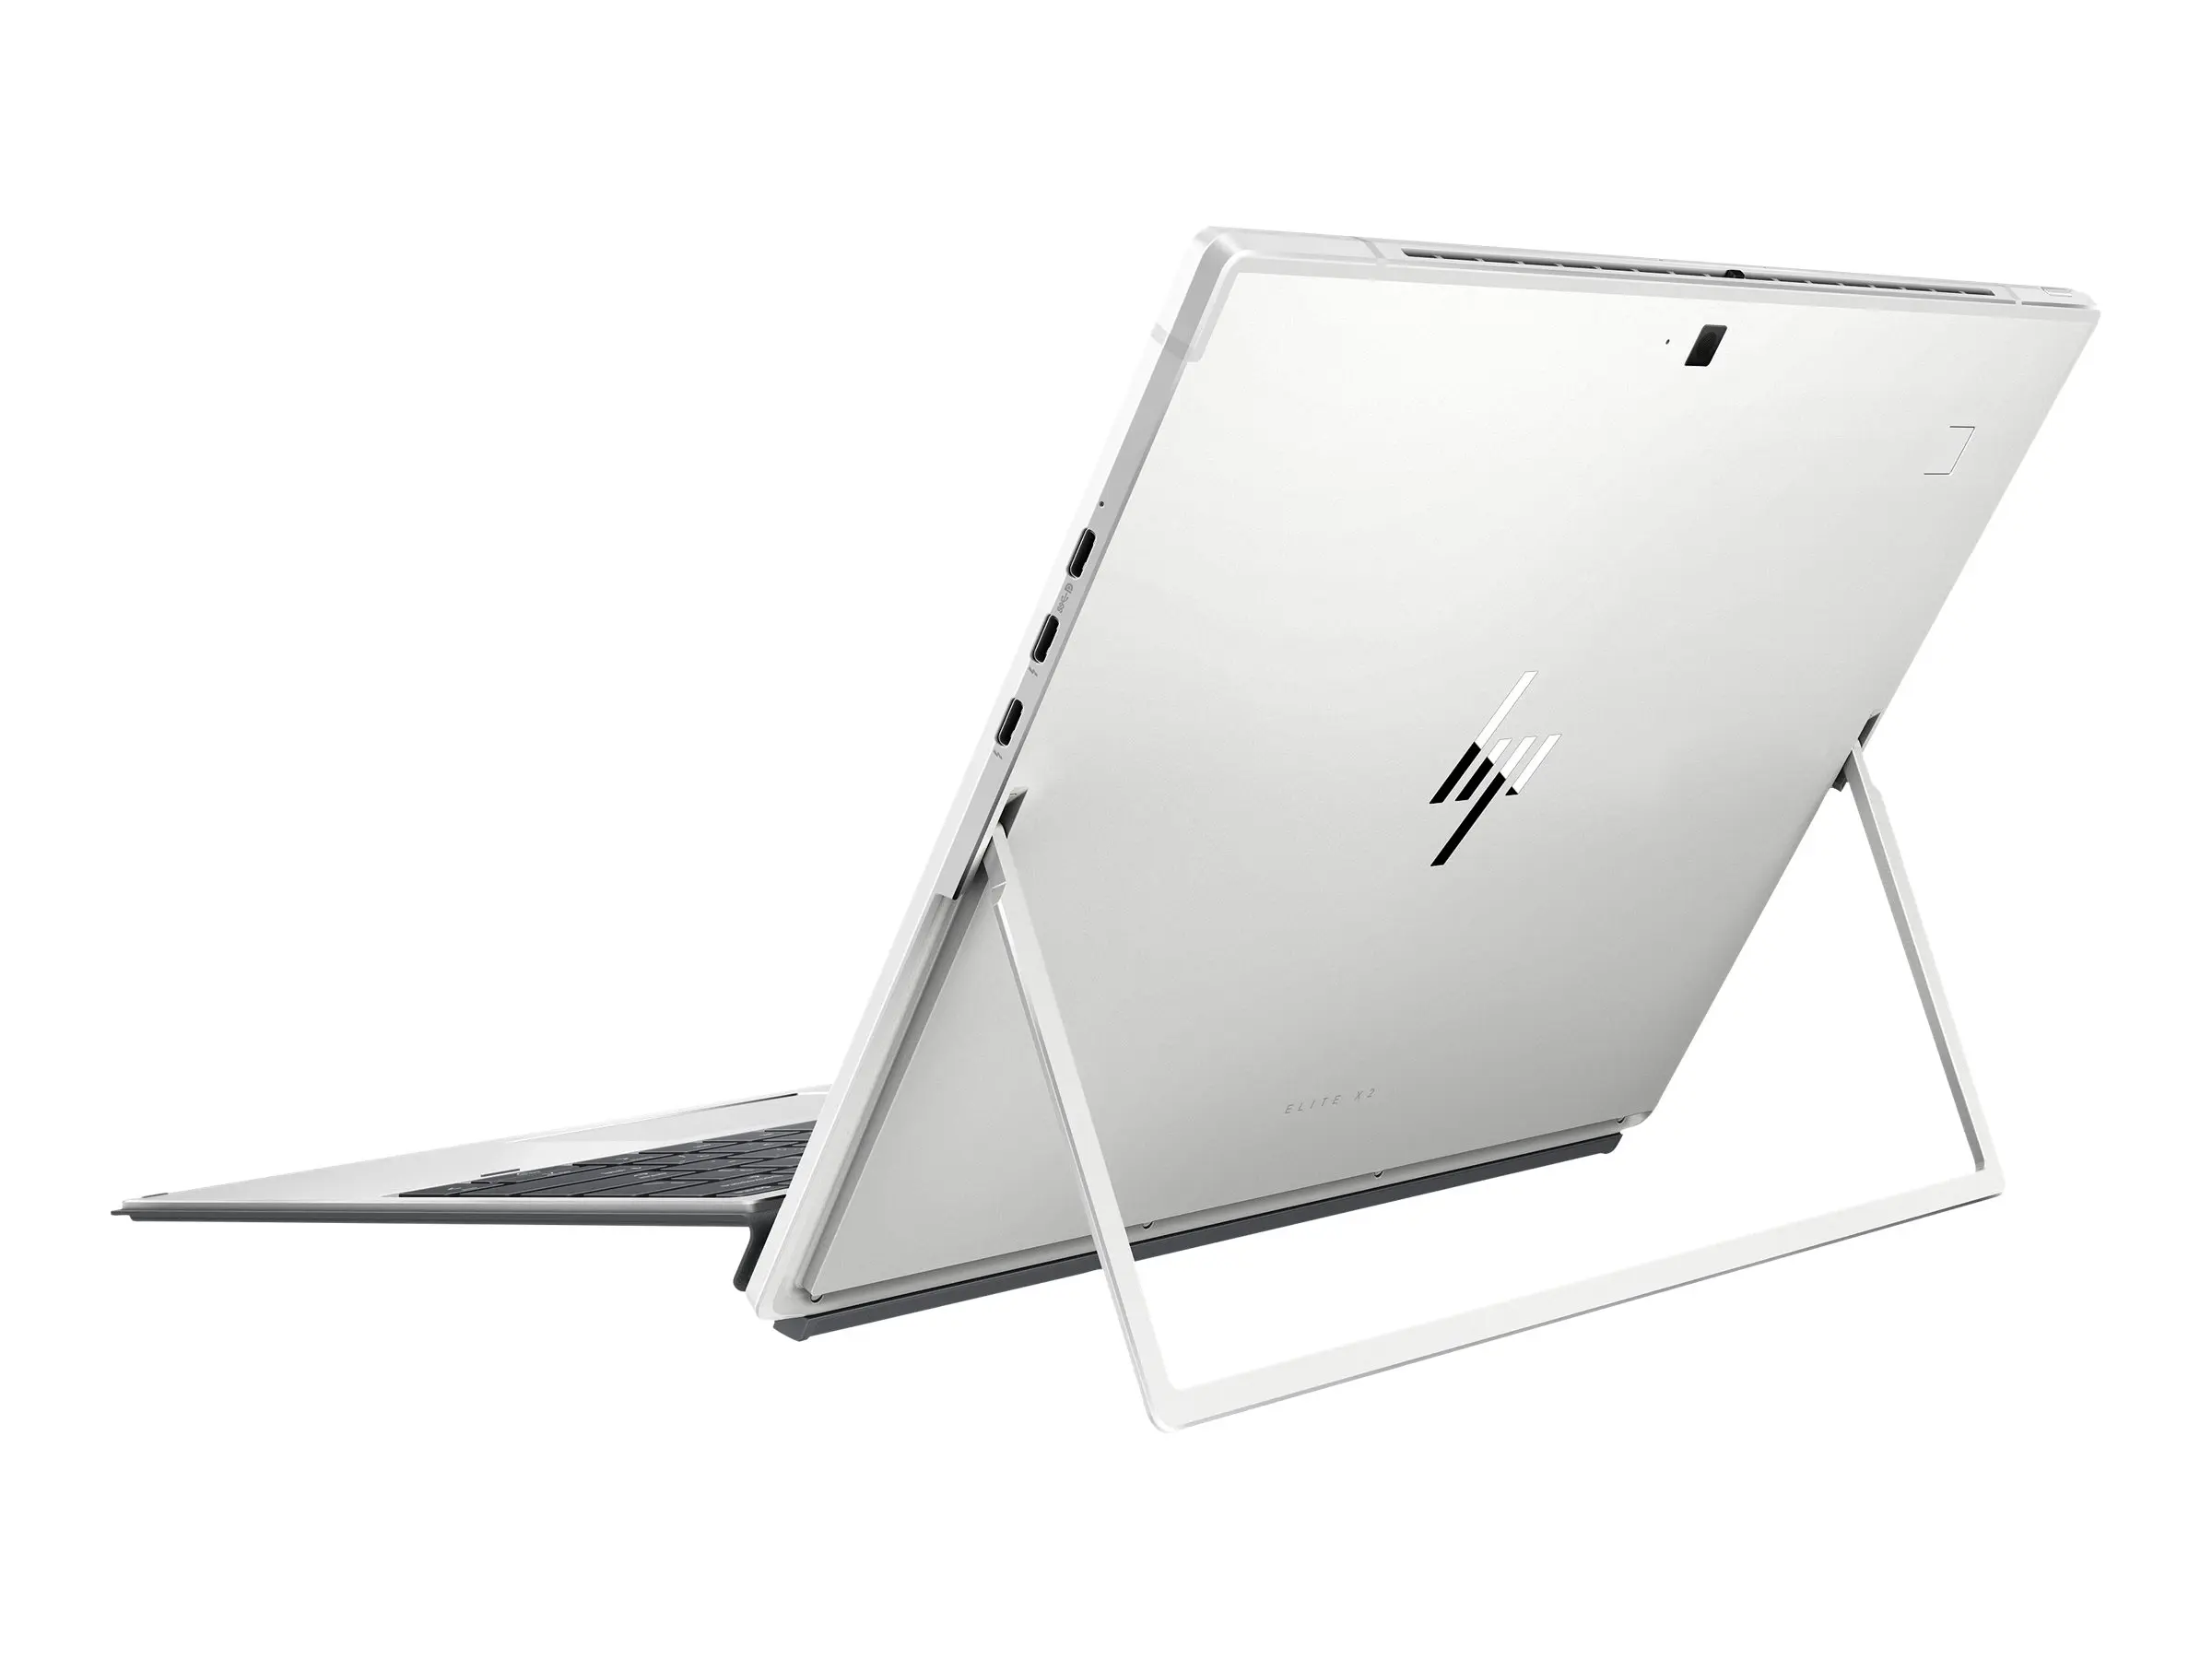 hewlett packard elite x2 tablet - Does HP Elite X2 have Bluetooth